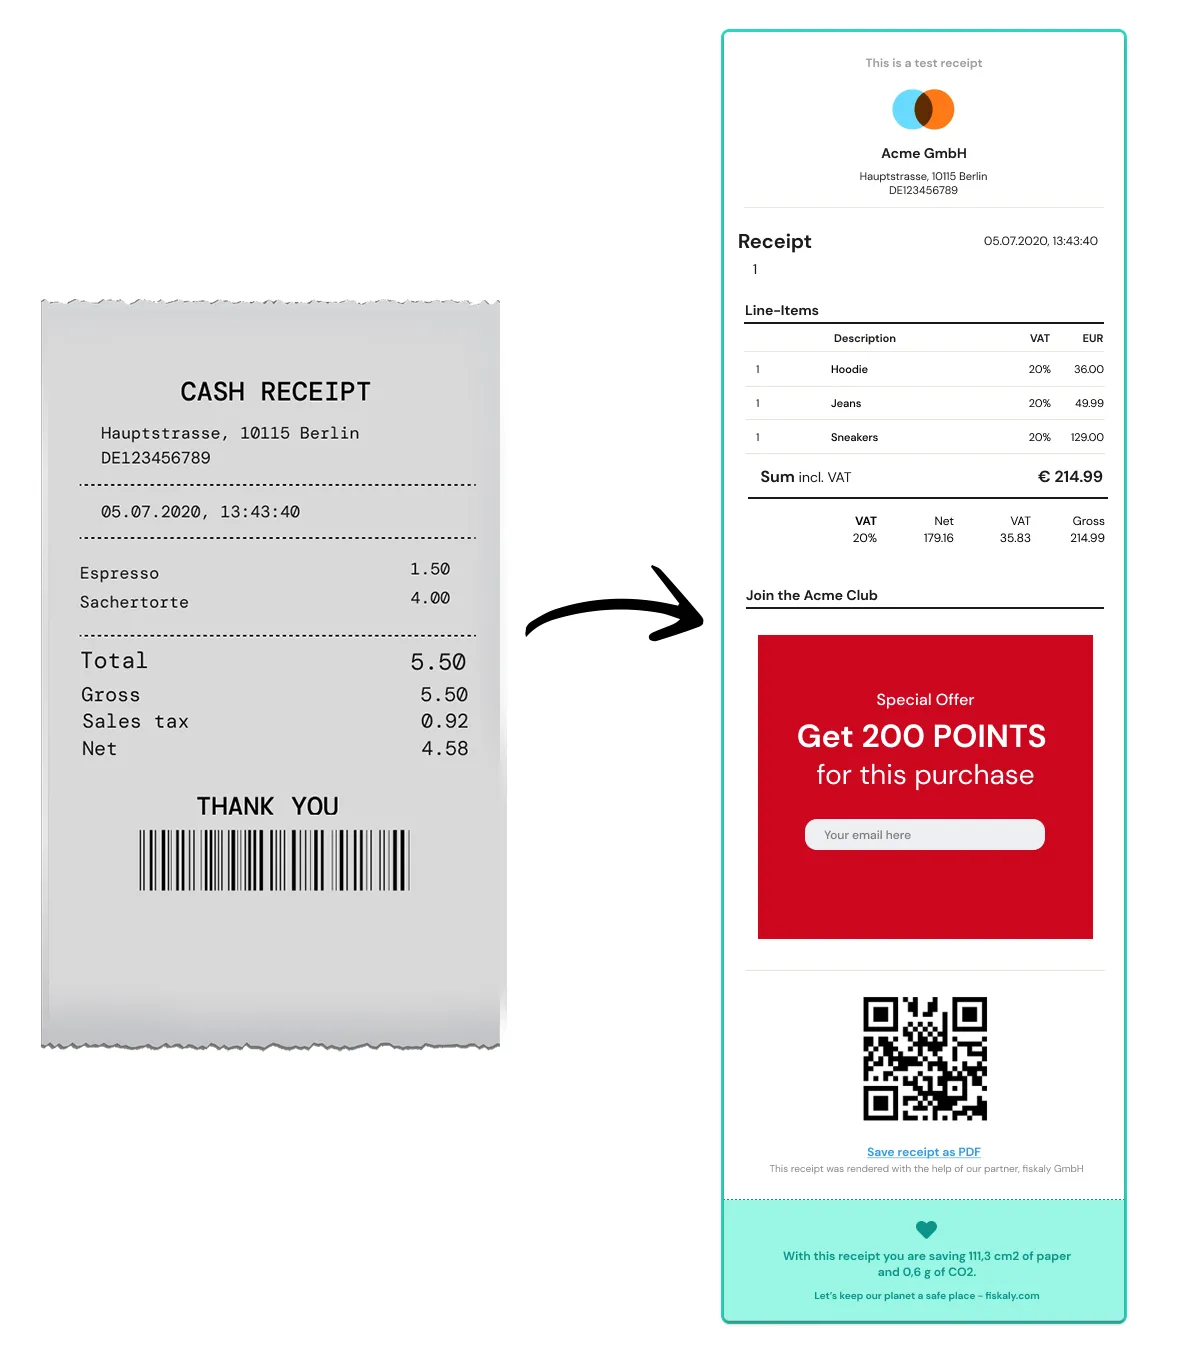 Paper and fiskaly digital receipt comparison